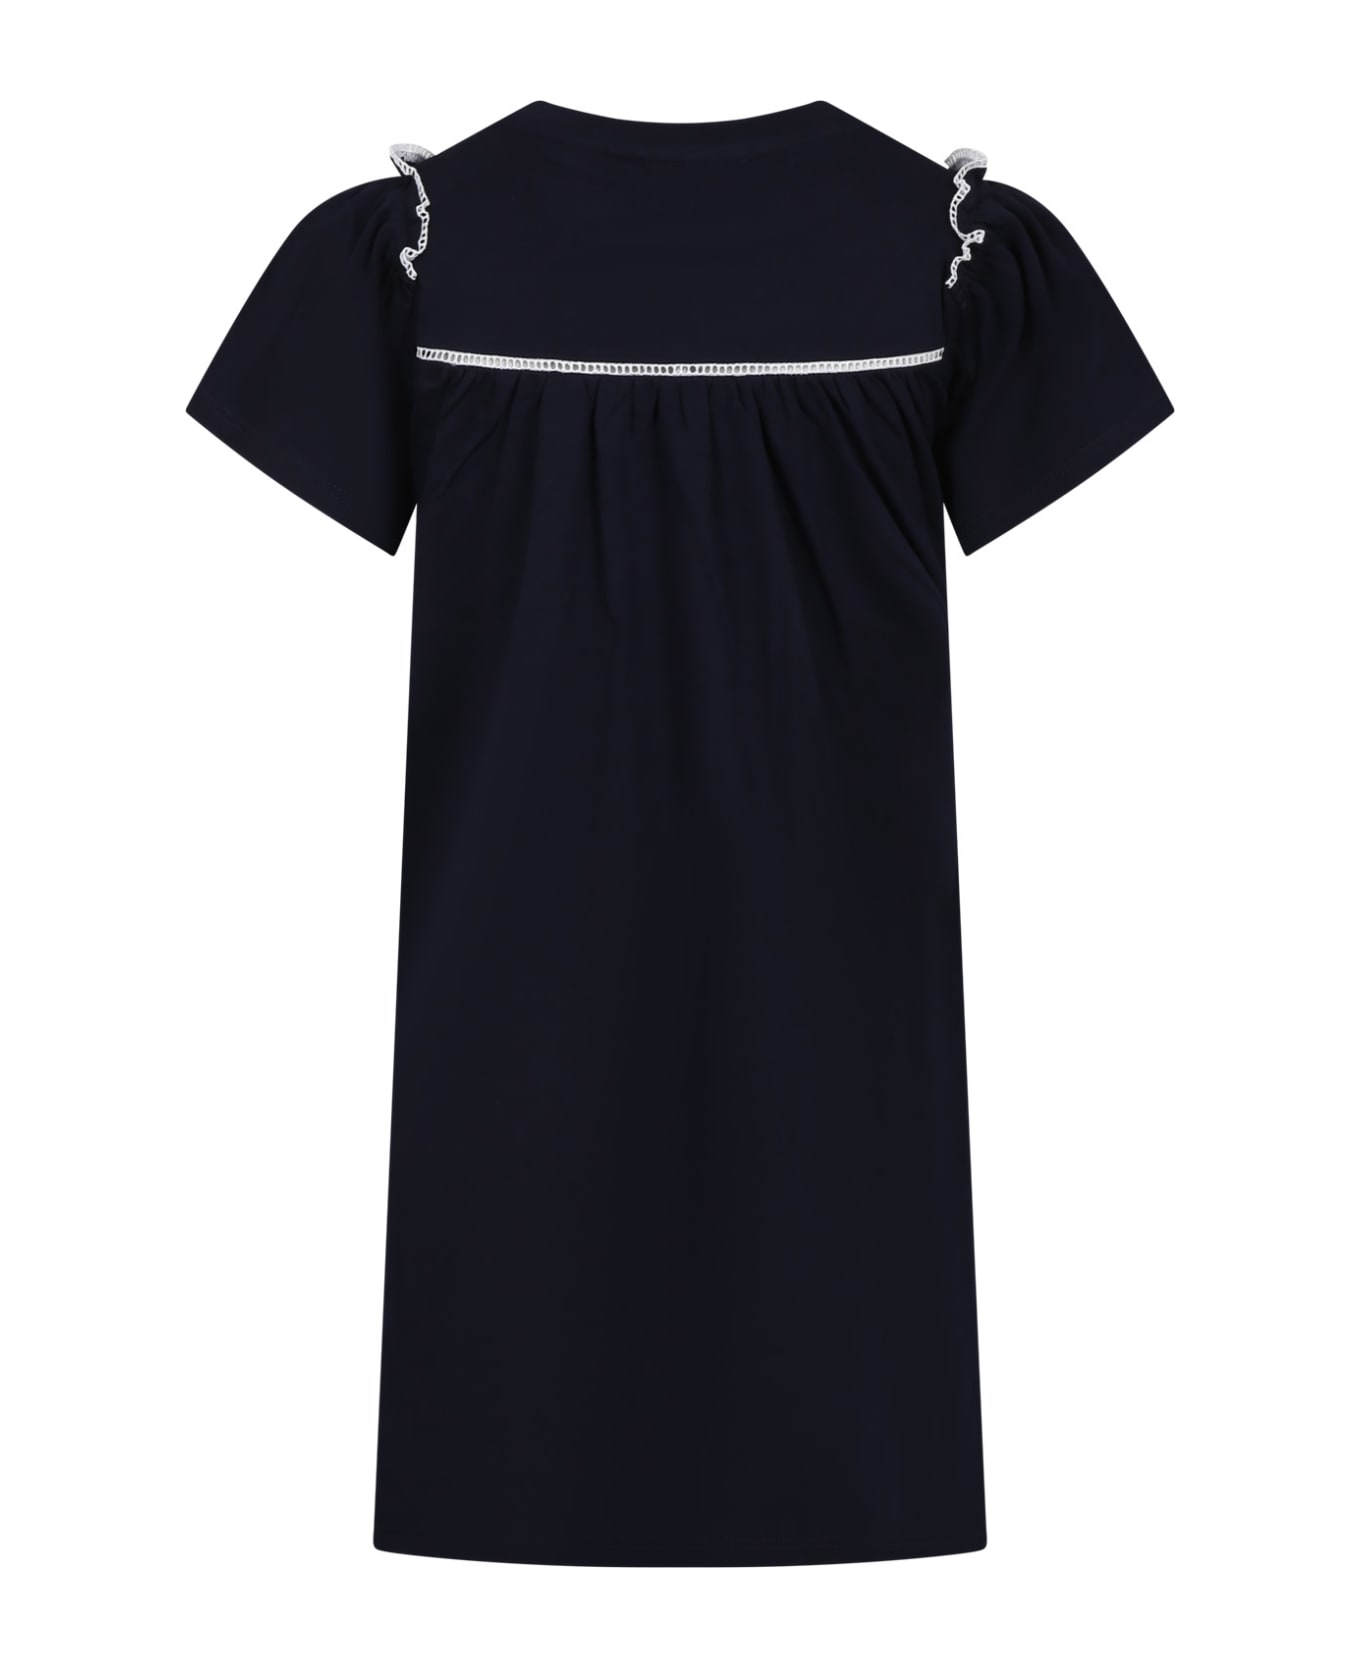 Chloé Blue Dress For Baby Girl With Logo - Marine